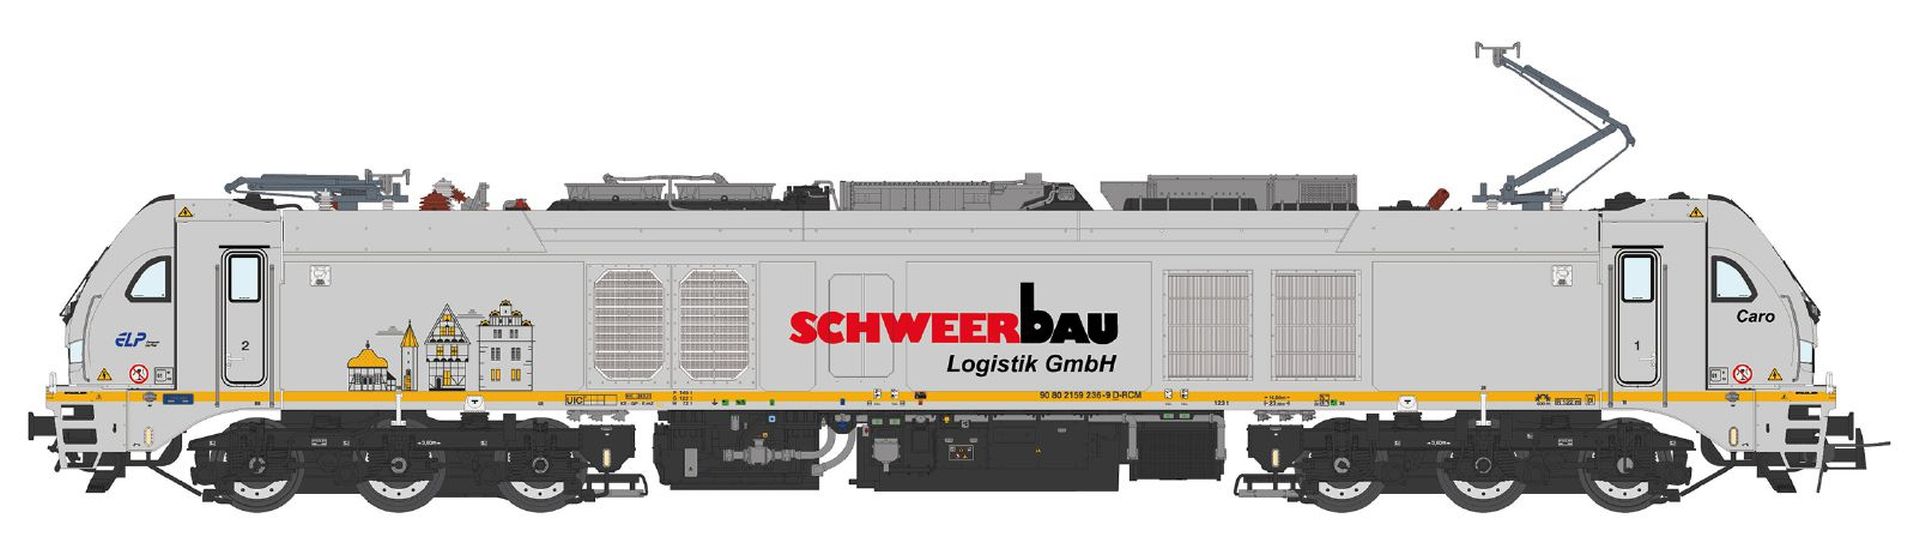 Sudexpress S1592361 - Stadler Dual-Mode Lok 159 236-9, Schweerbau Logistik, Ep.VI